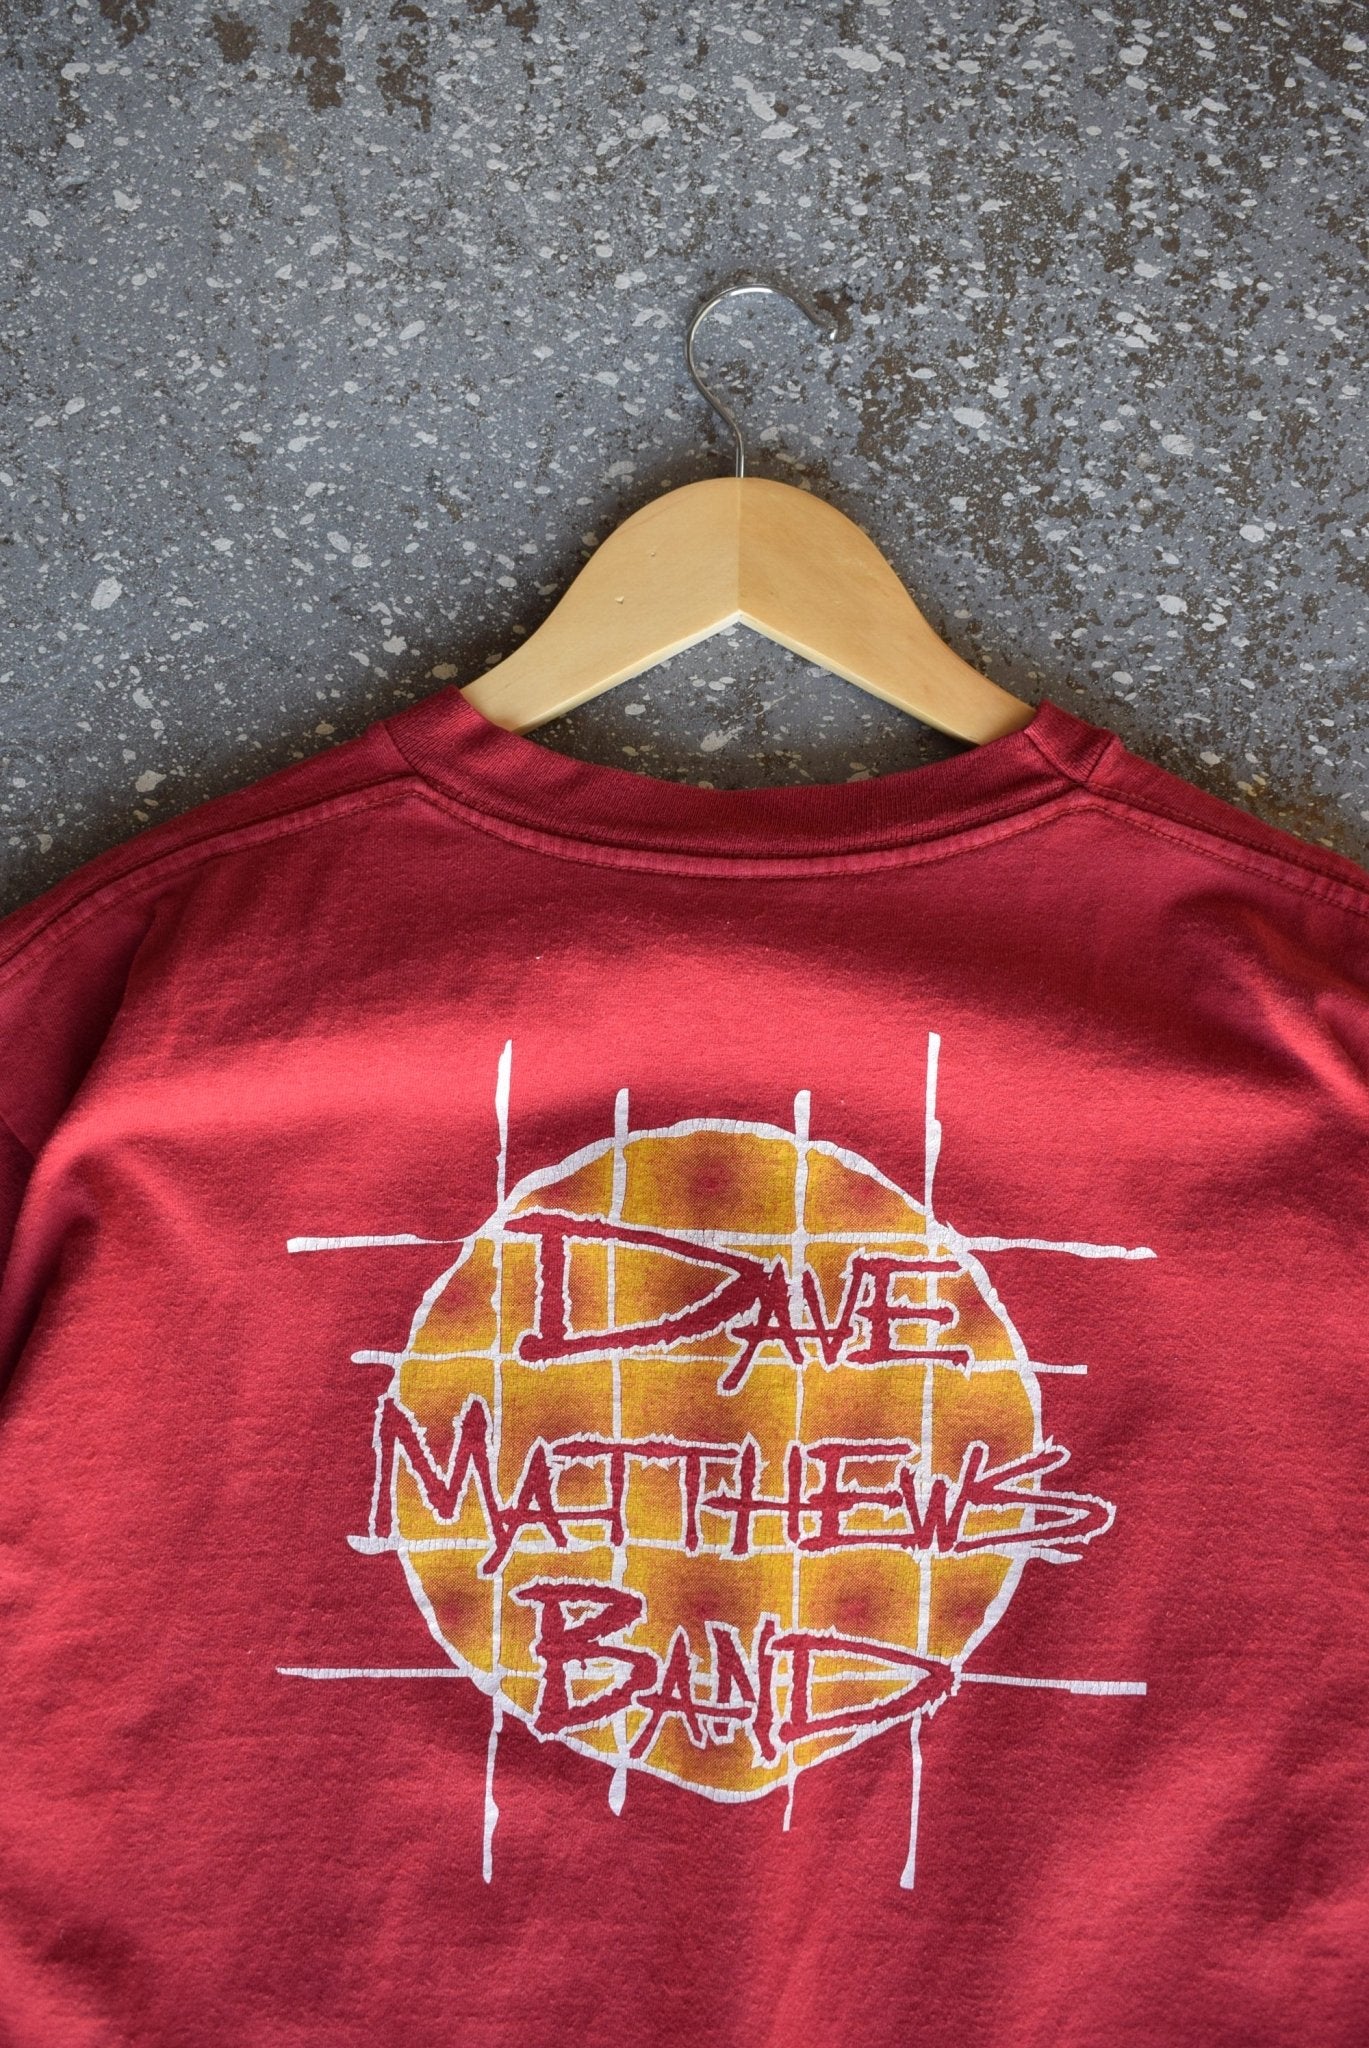 Vintage 90s Dave Matthews Band Tee (M) - Retrospective Store